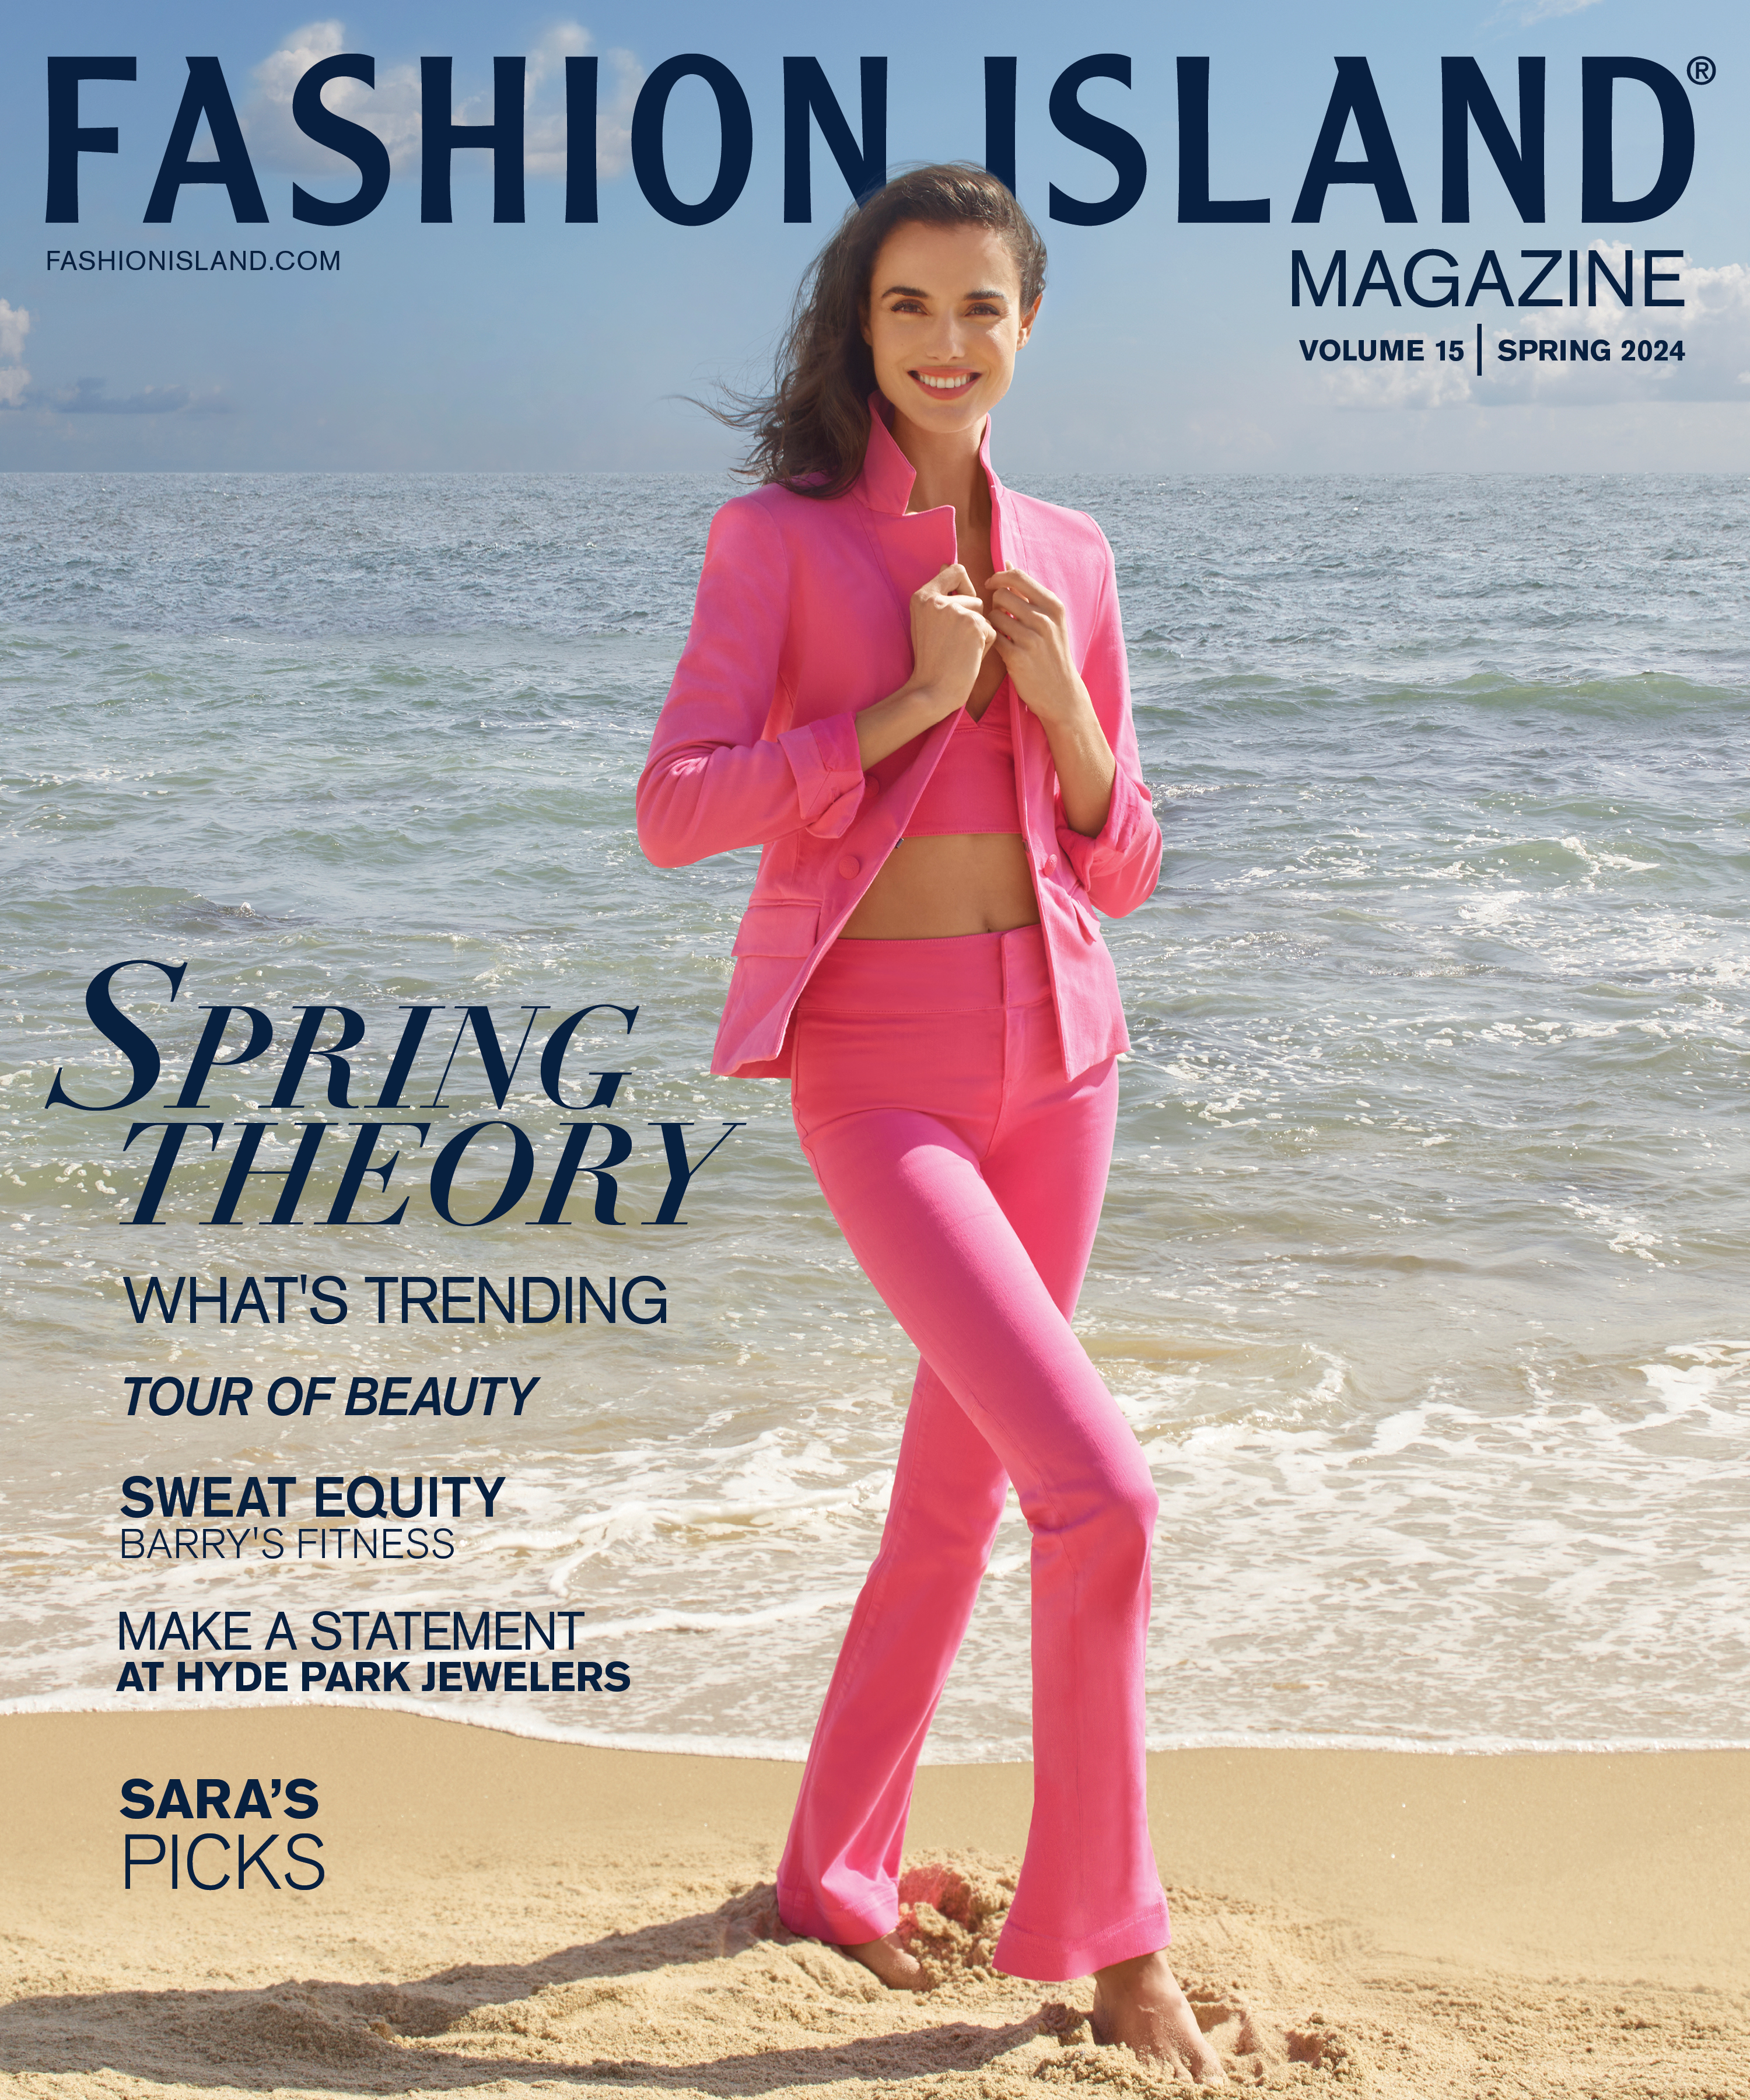 Fashion Island Magazine Volume 15 | Spring 2024